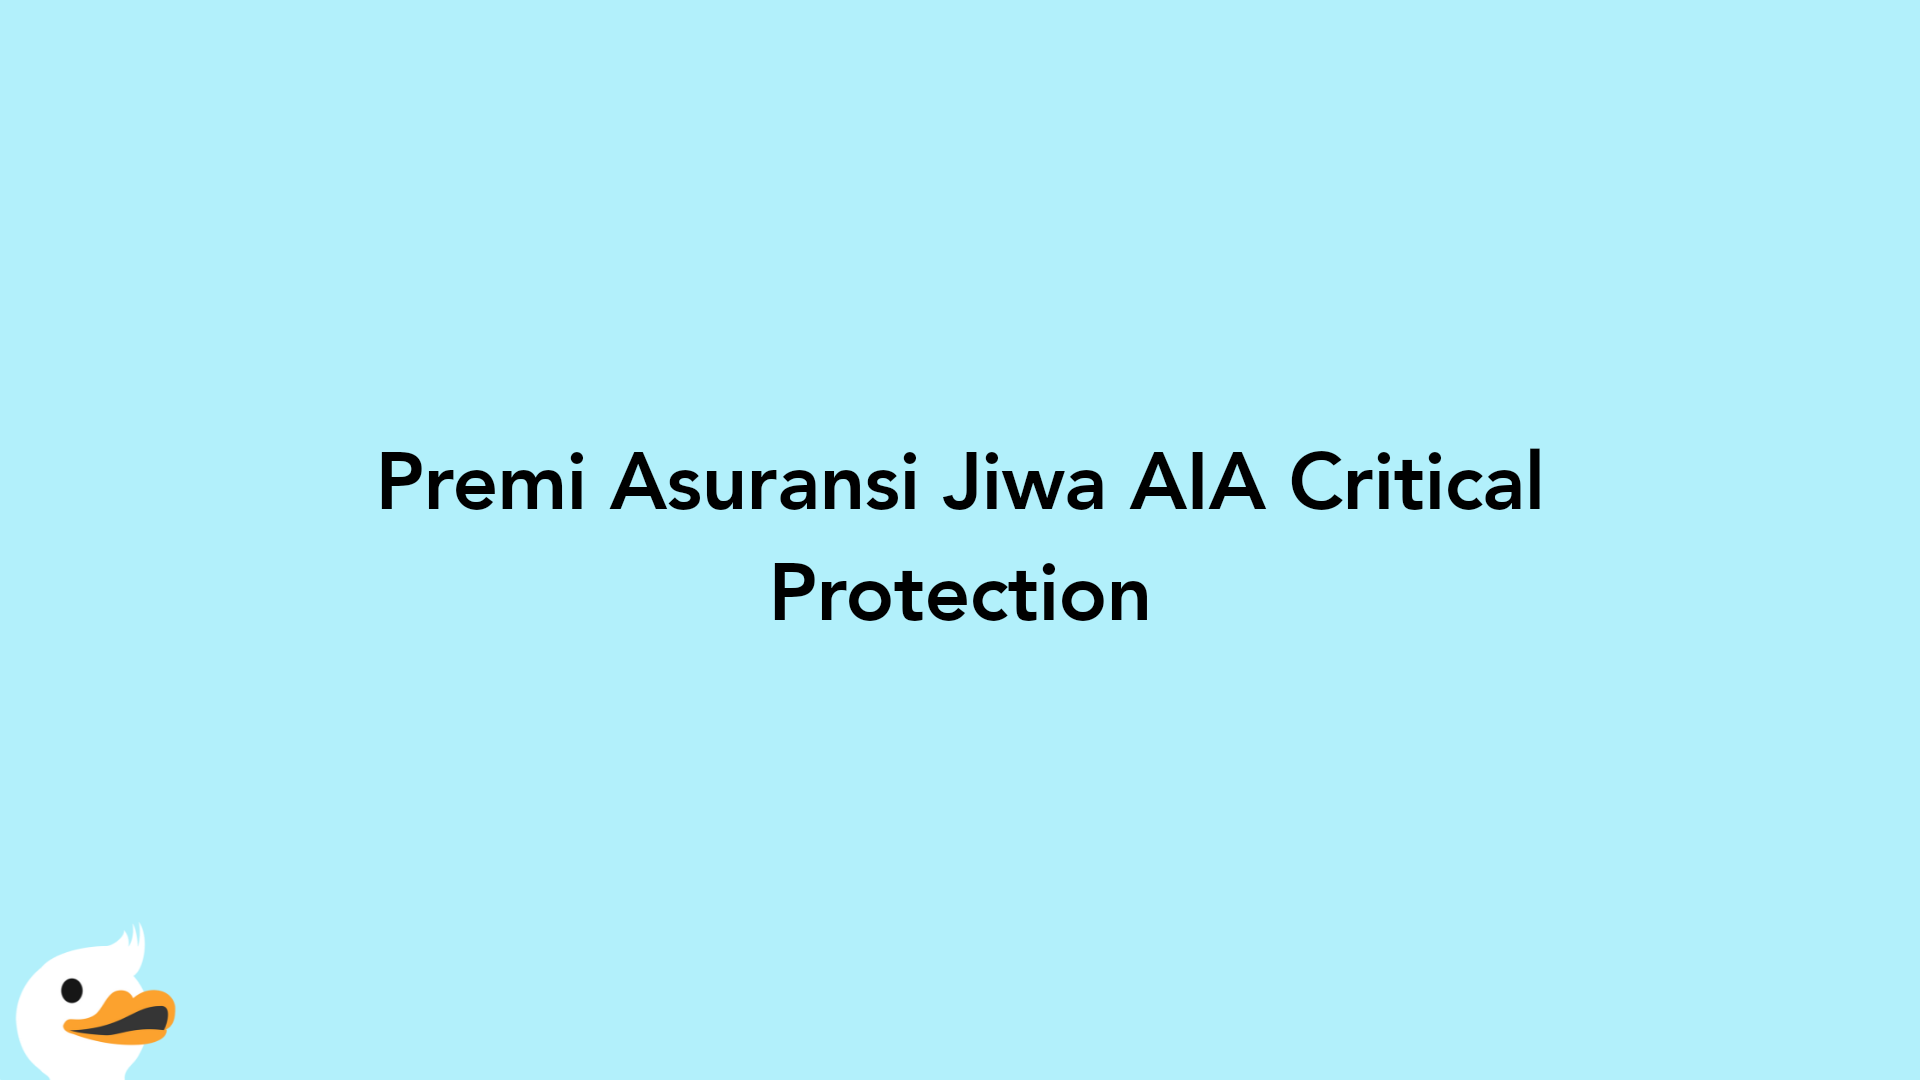 Premi Asuransi Jiwa AIA Critical Protection